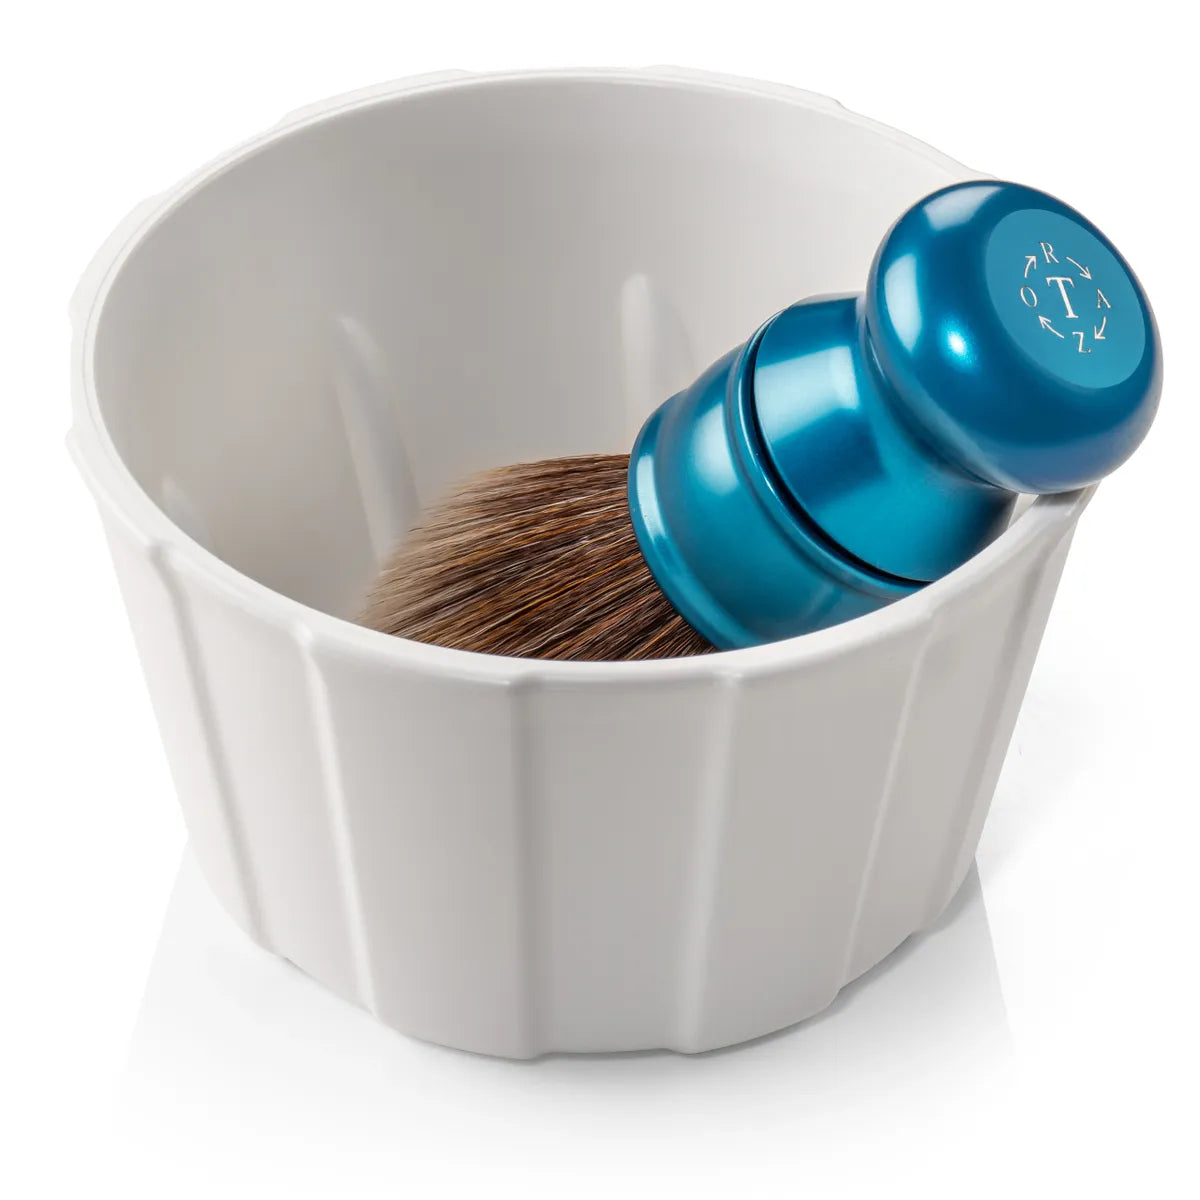 TRBOWL: Timeless Razor Plastic Shaving Bowl